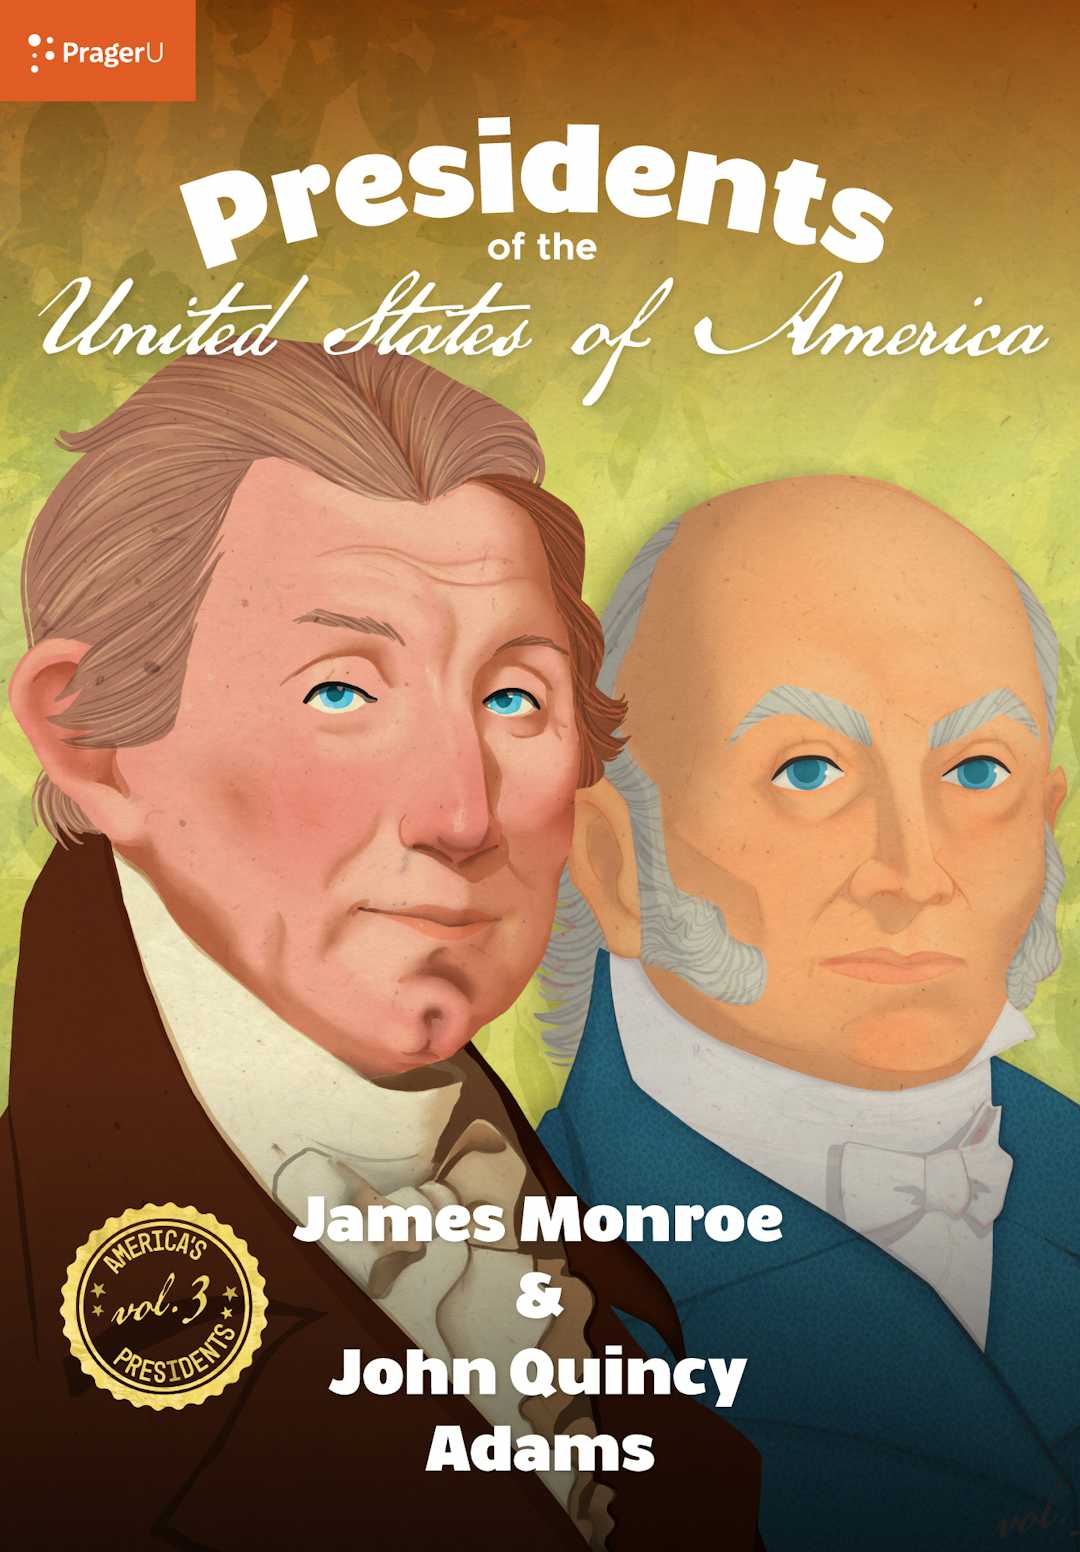 U.S. Presidents Volume 3: James Monroe & John Quincy Adams